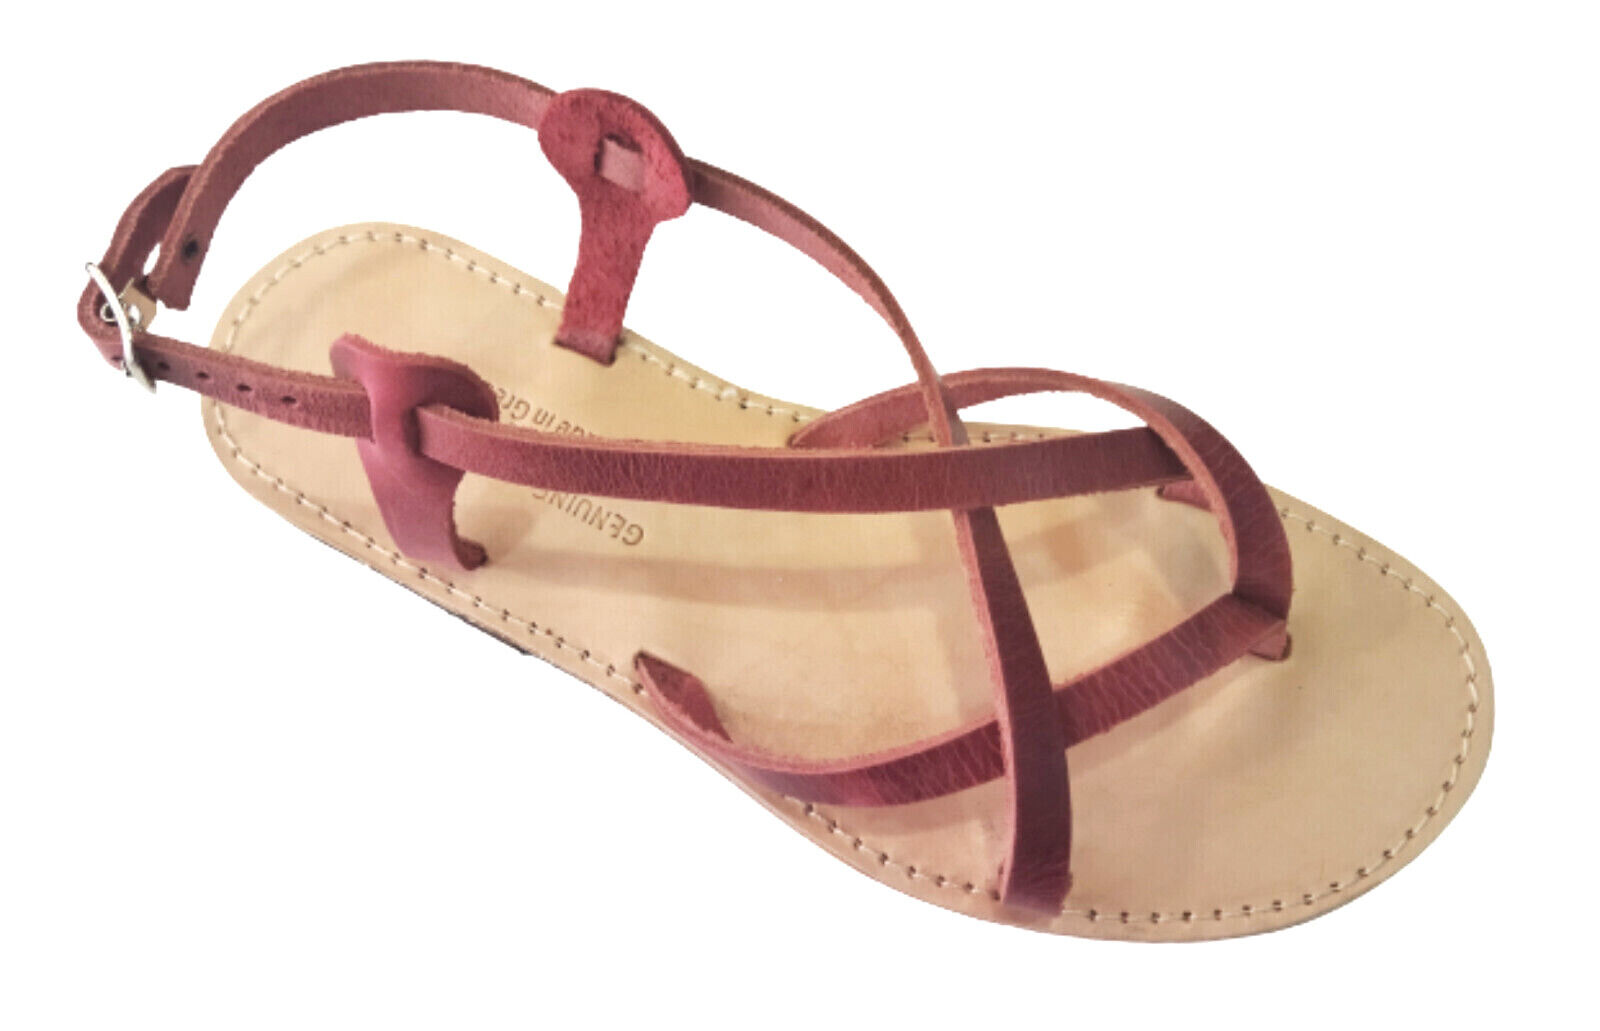 1070 greek handmade leather sandals